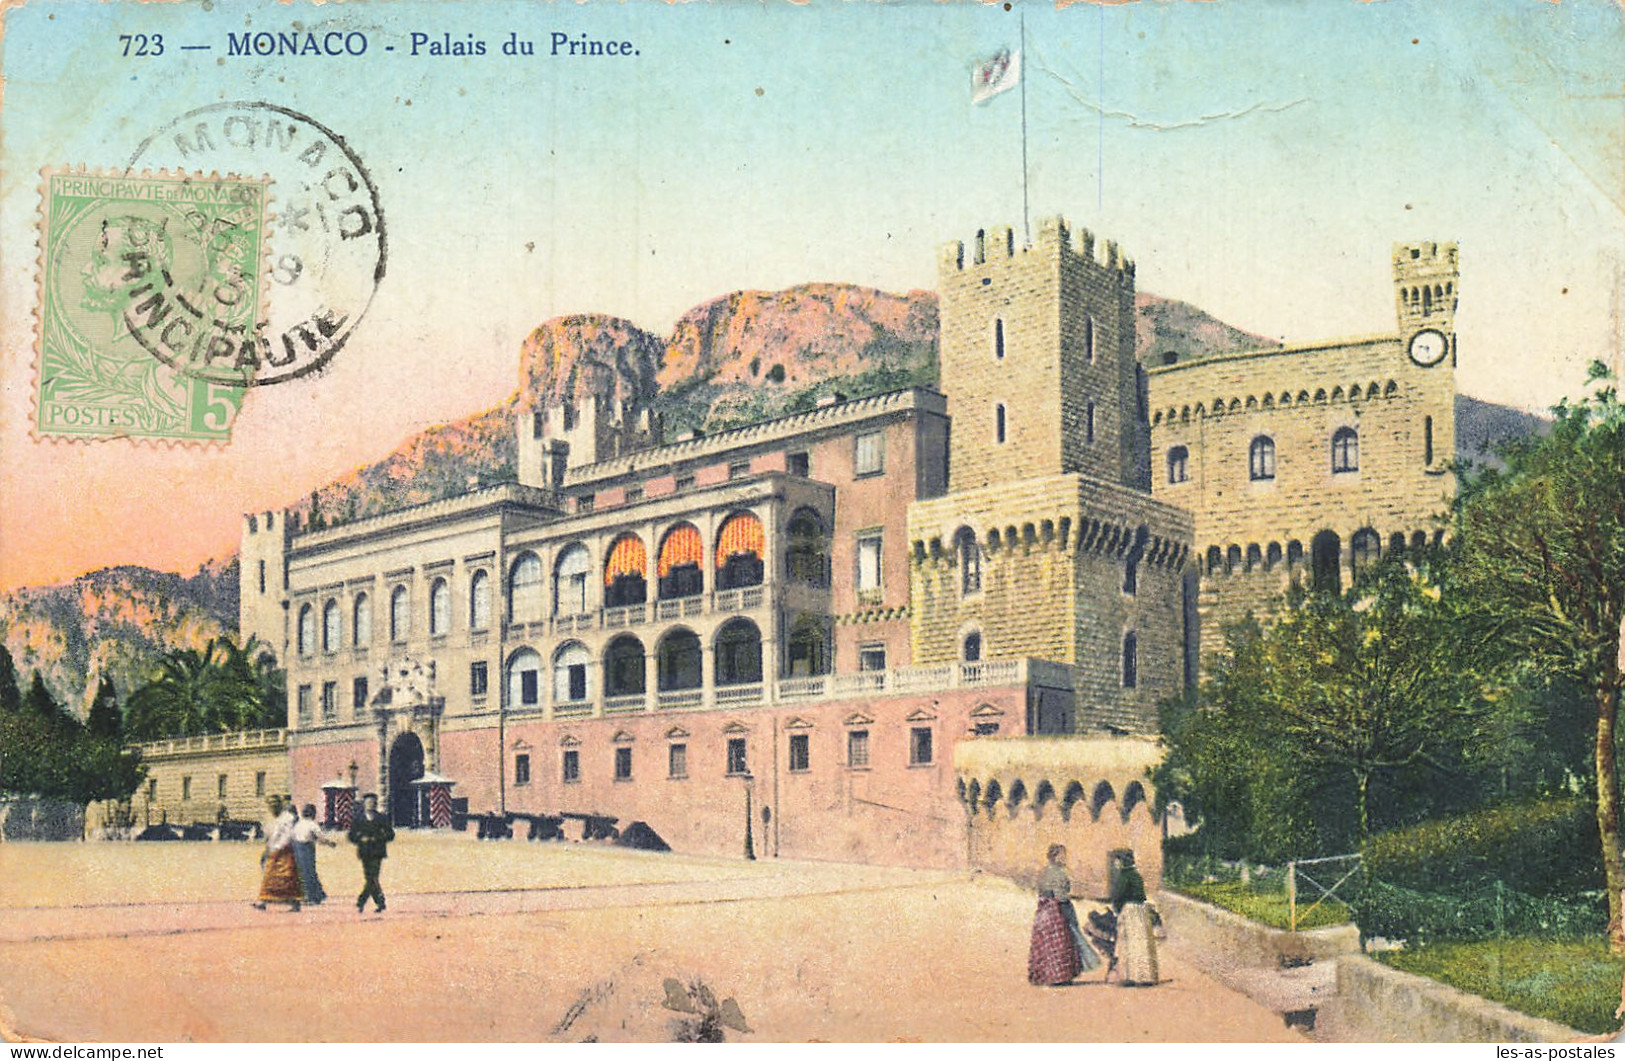 98 MONACO PALAIS DU PRINCE - Prince's Palace